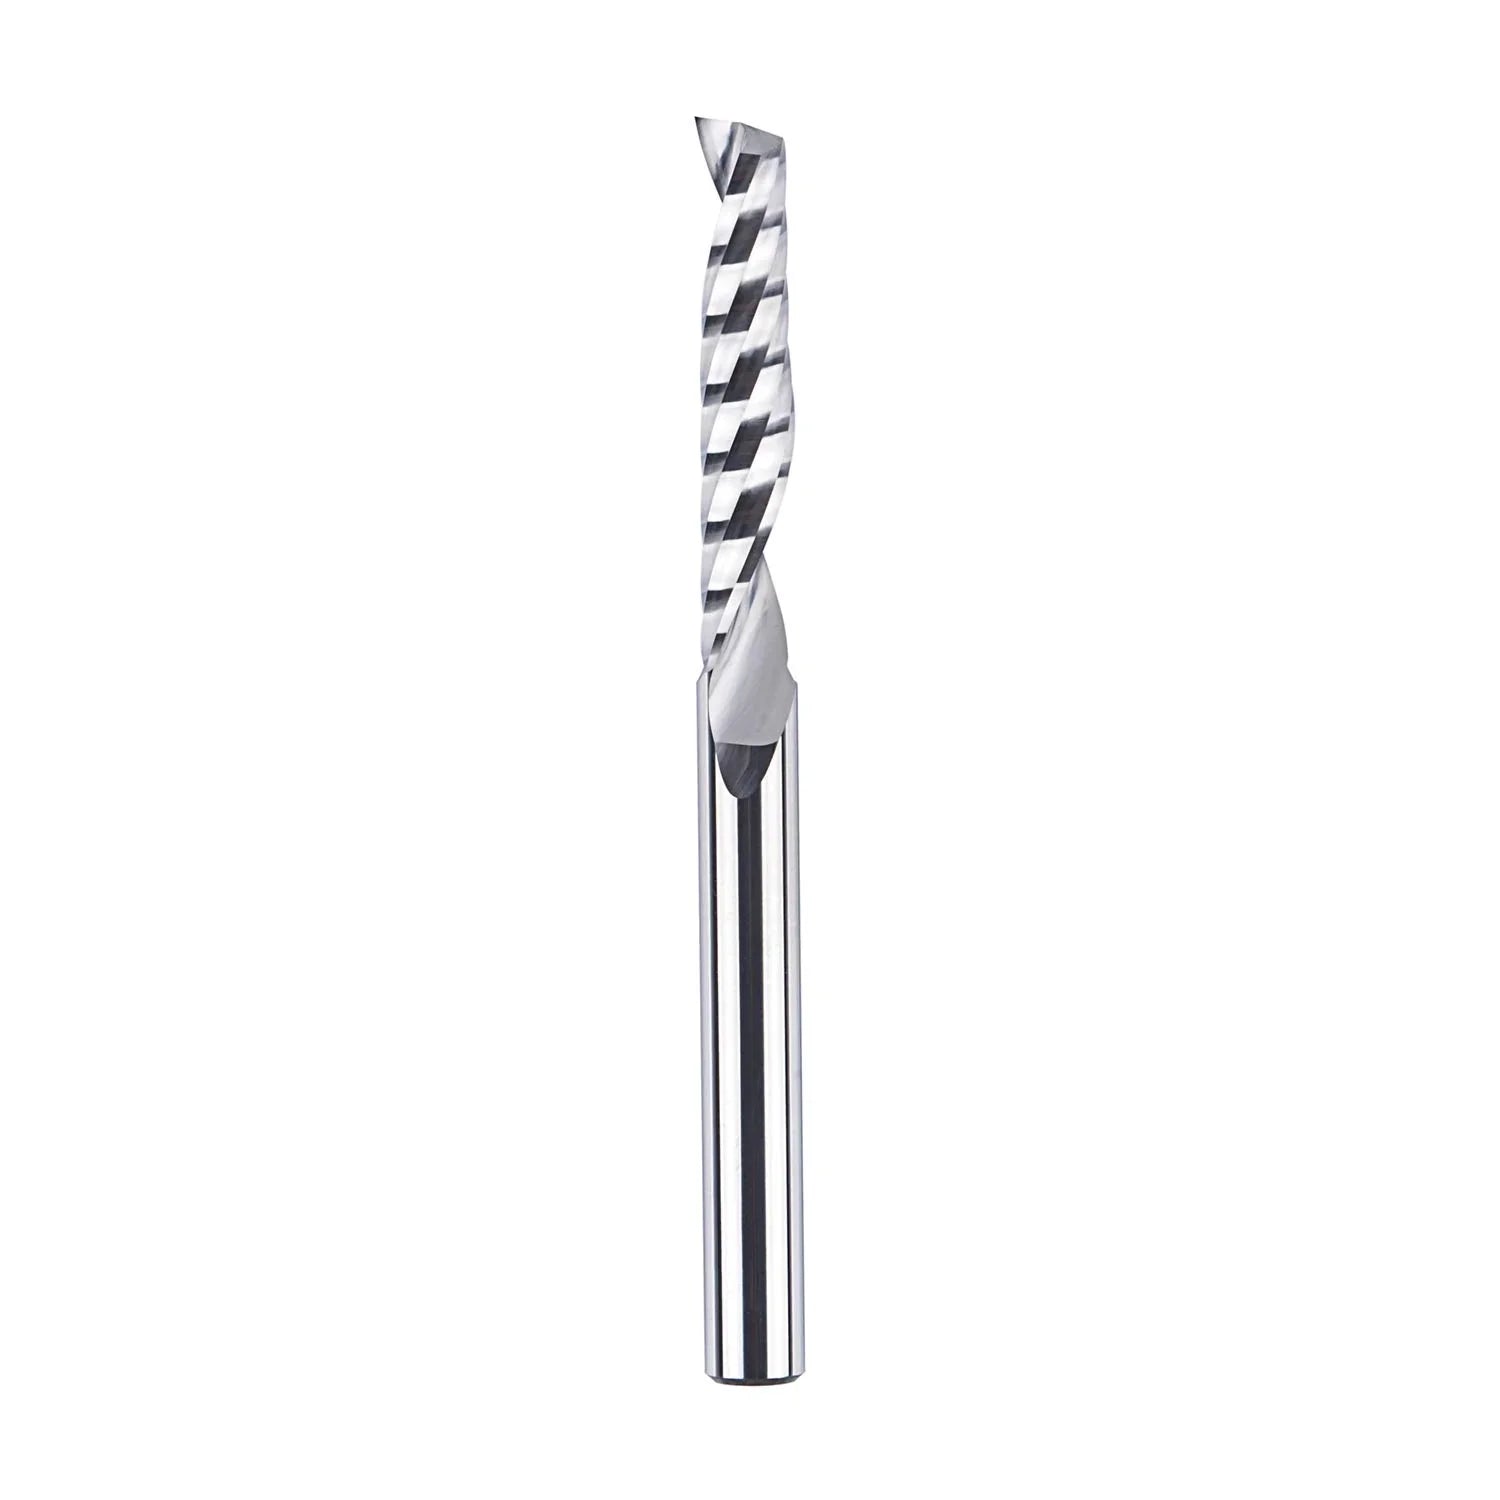 SpeTool UpCut Single Flute Milling Cutter 6mm Dia 32mm Cutting Length